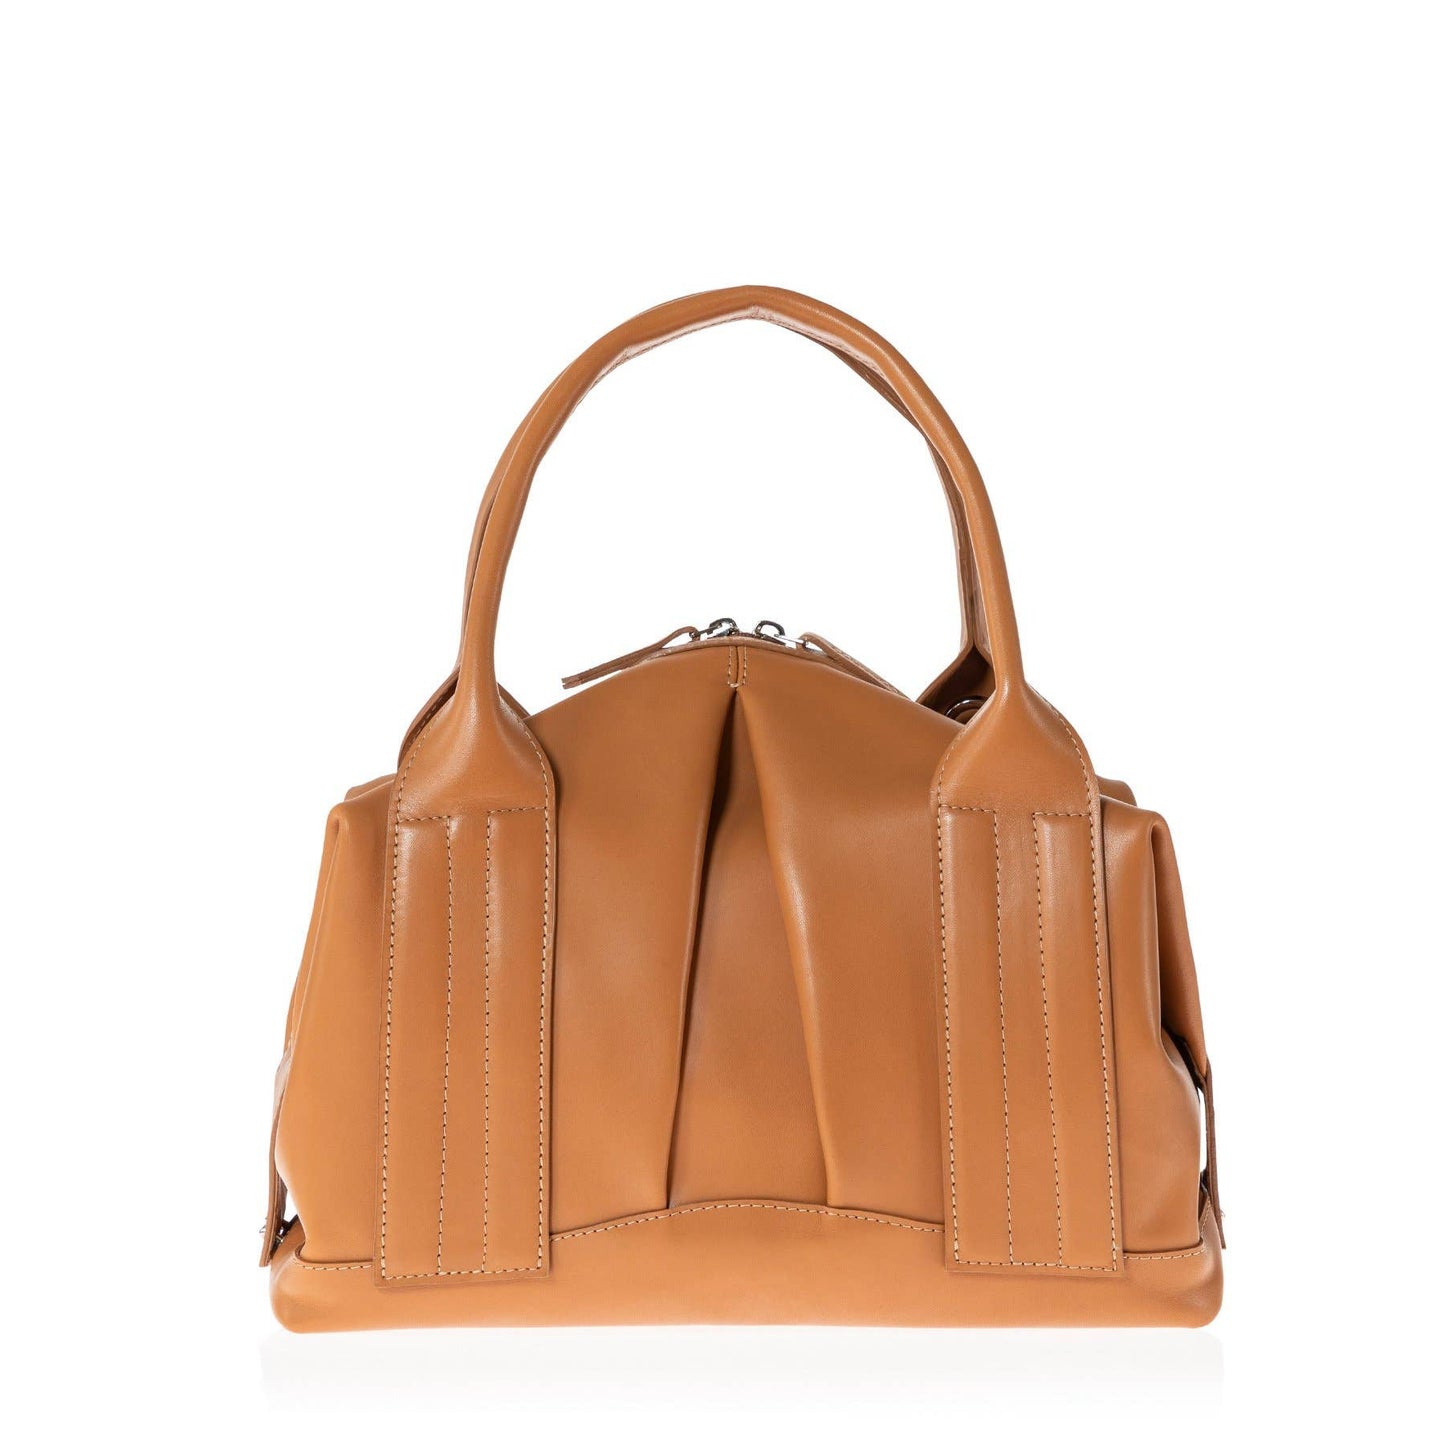 Joanna Maxham: Luxury Designer Handbags - Cast Away Too (Tan Leather)